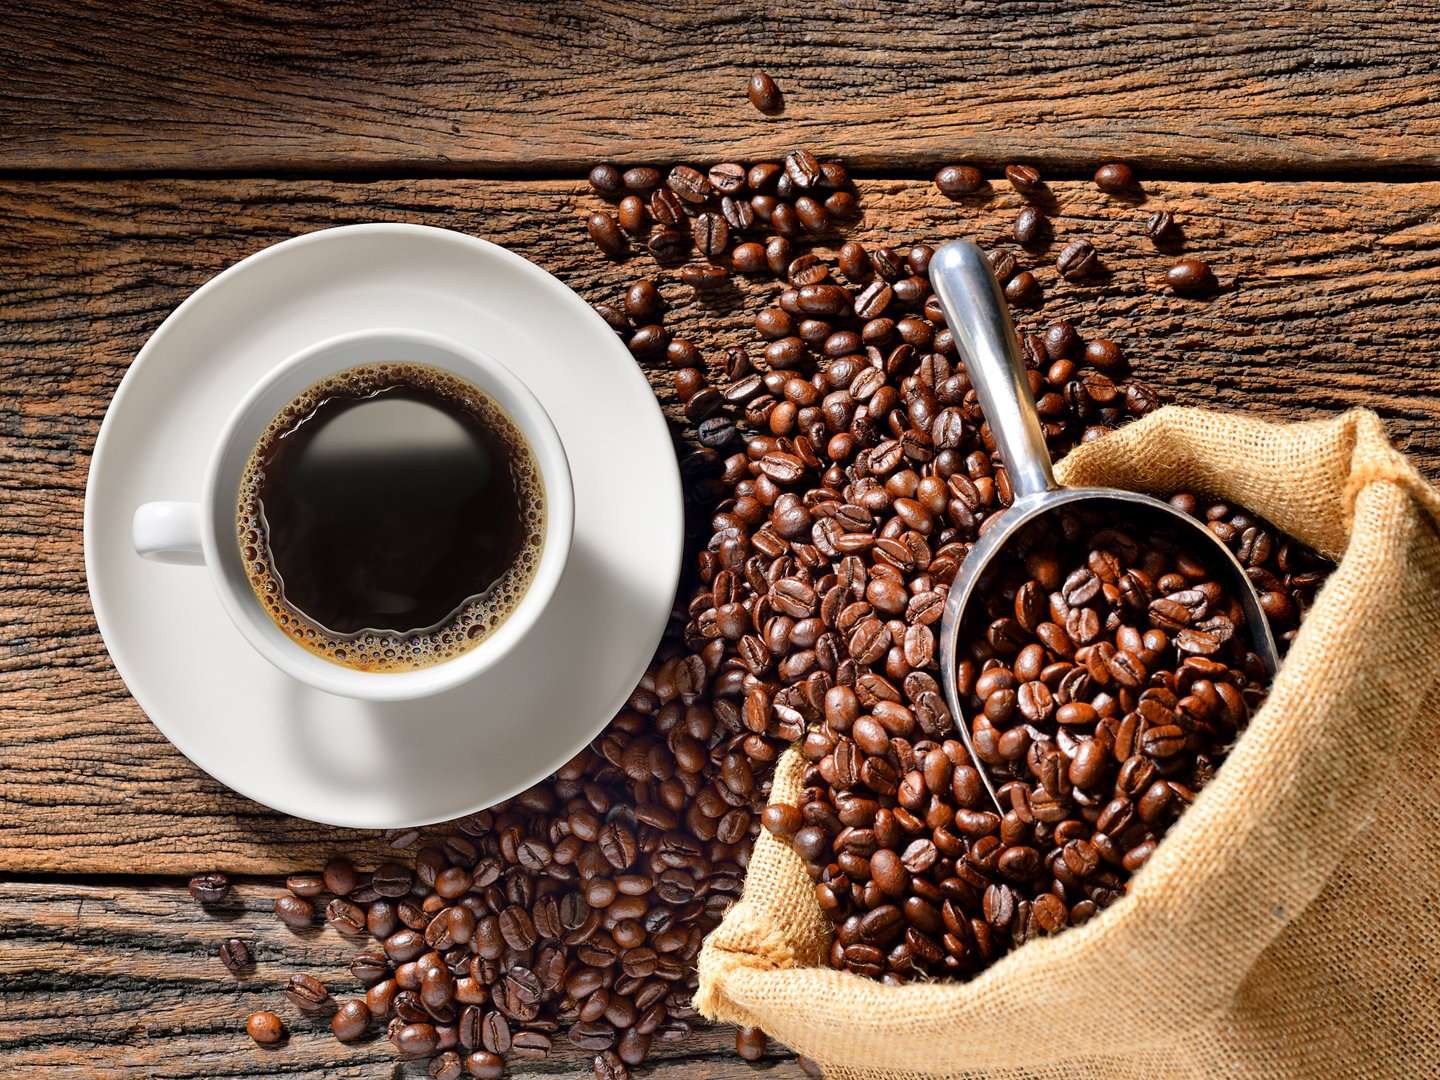 Does Coffee Raise Cholesterol?